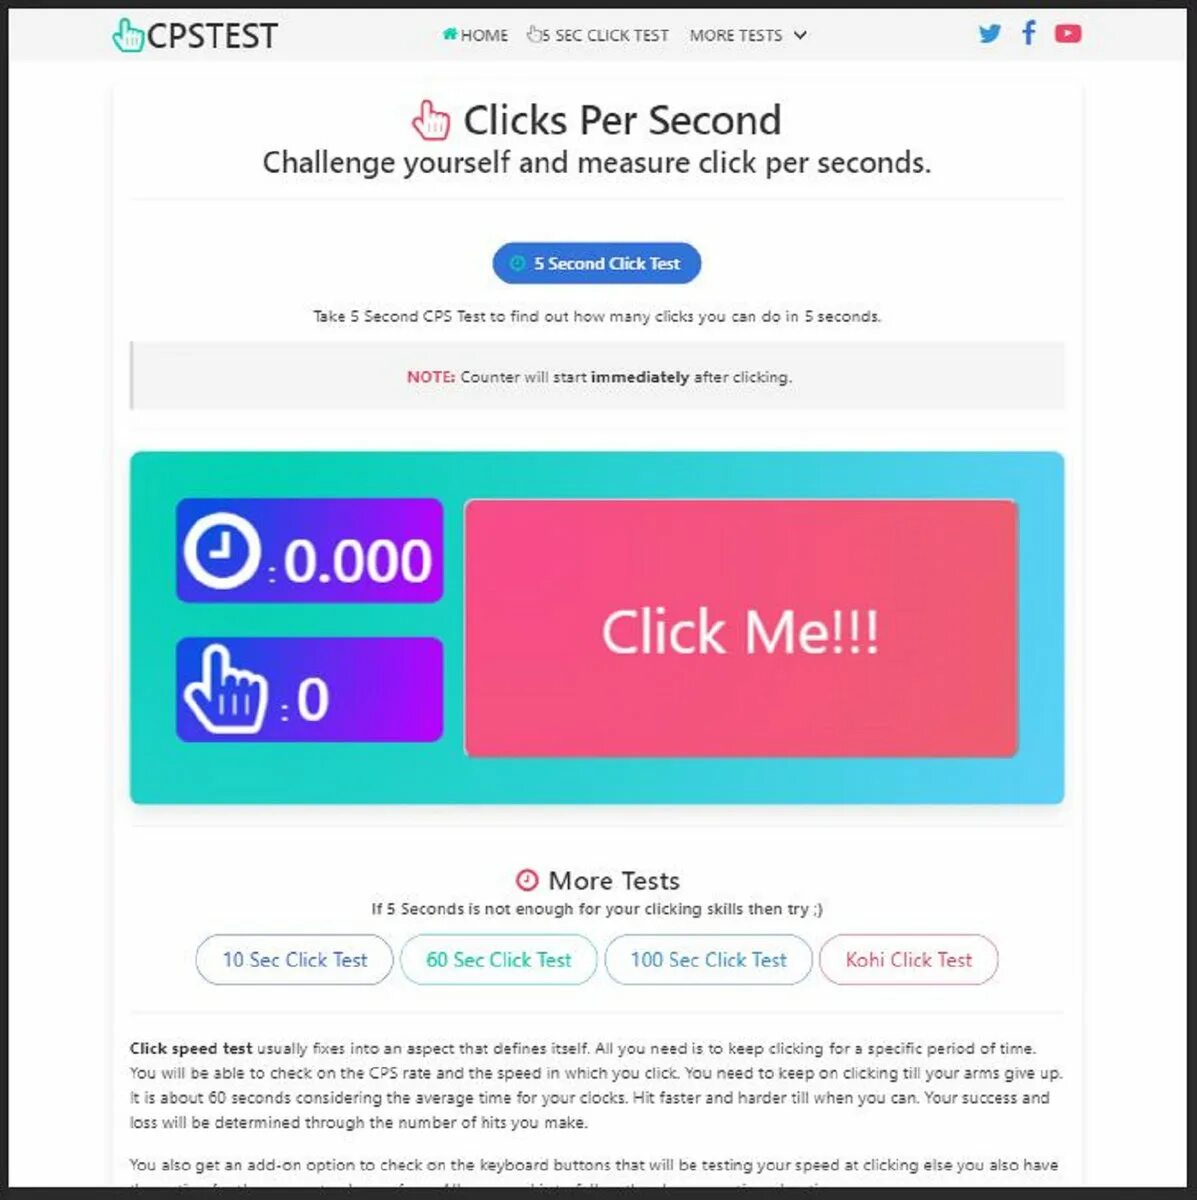 Клика в 10 секундном тесте. CPS Test. Click Speed Test. Click per second. CPS Test - clicks per second.